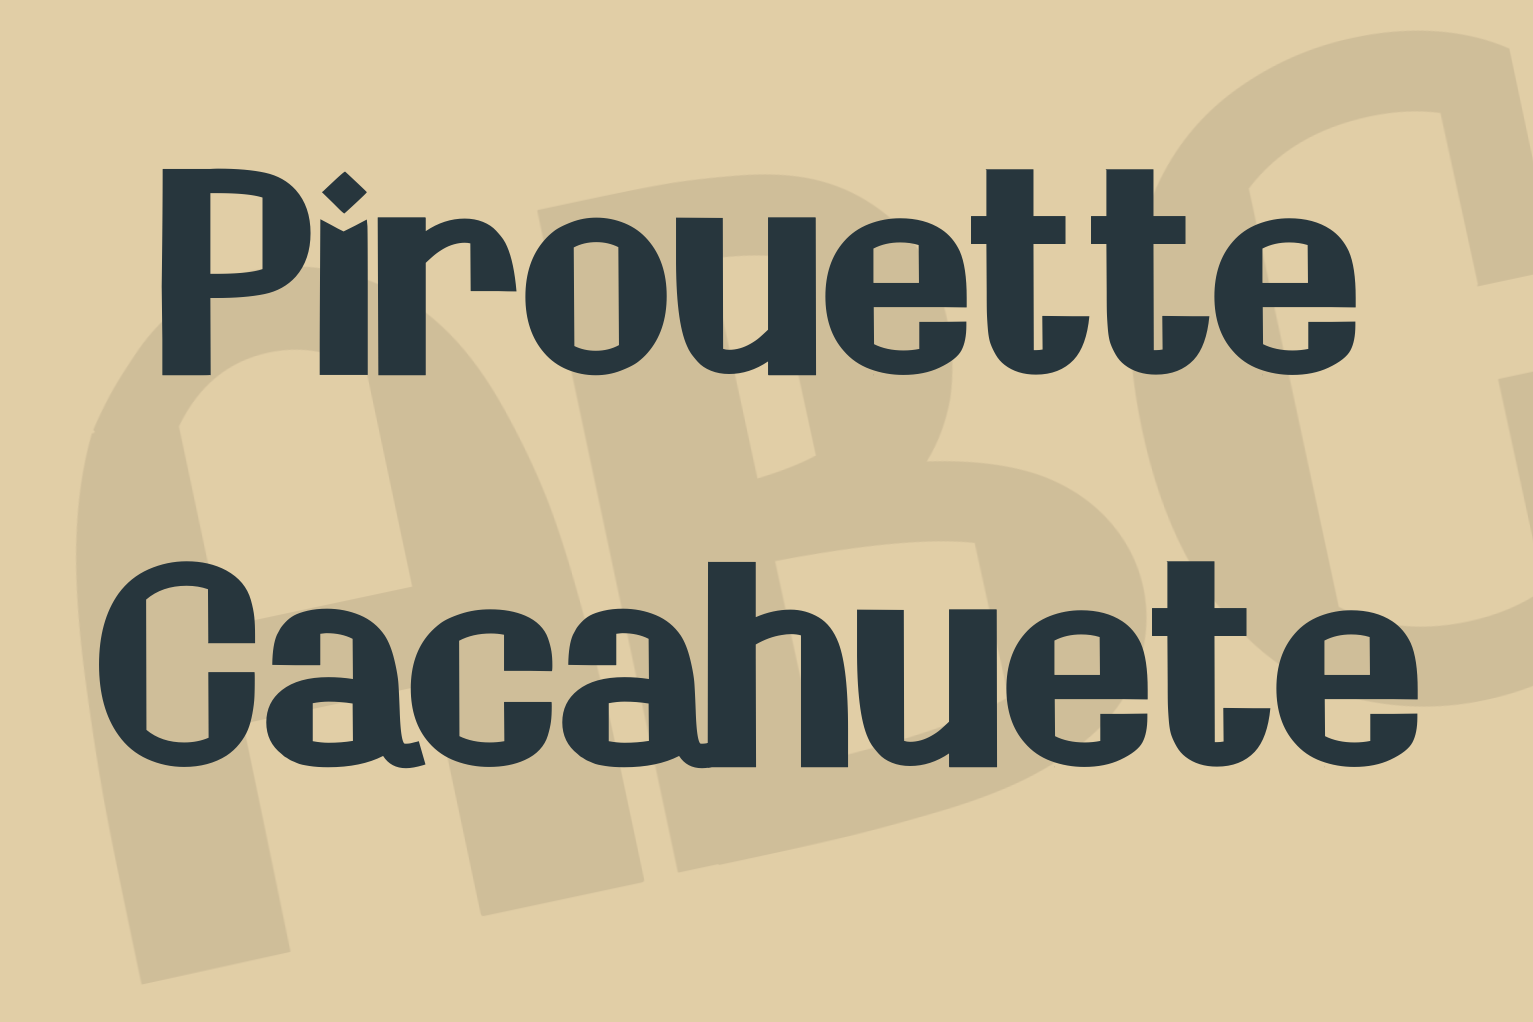 Pirouette Cacahuete